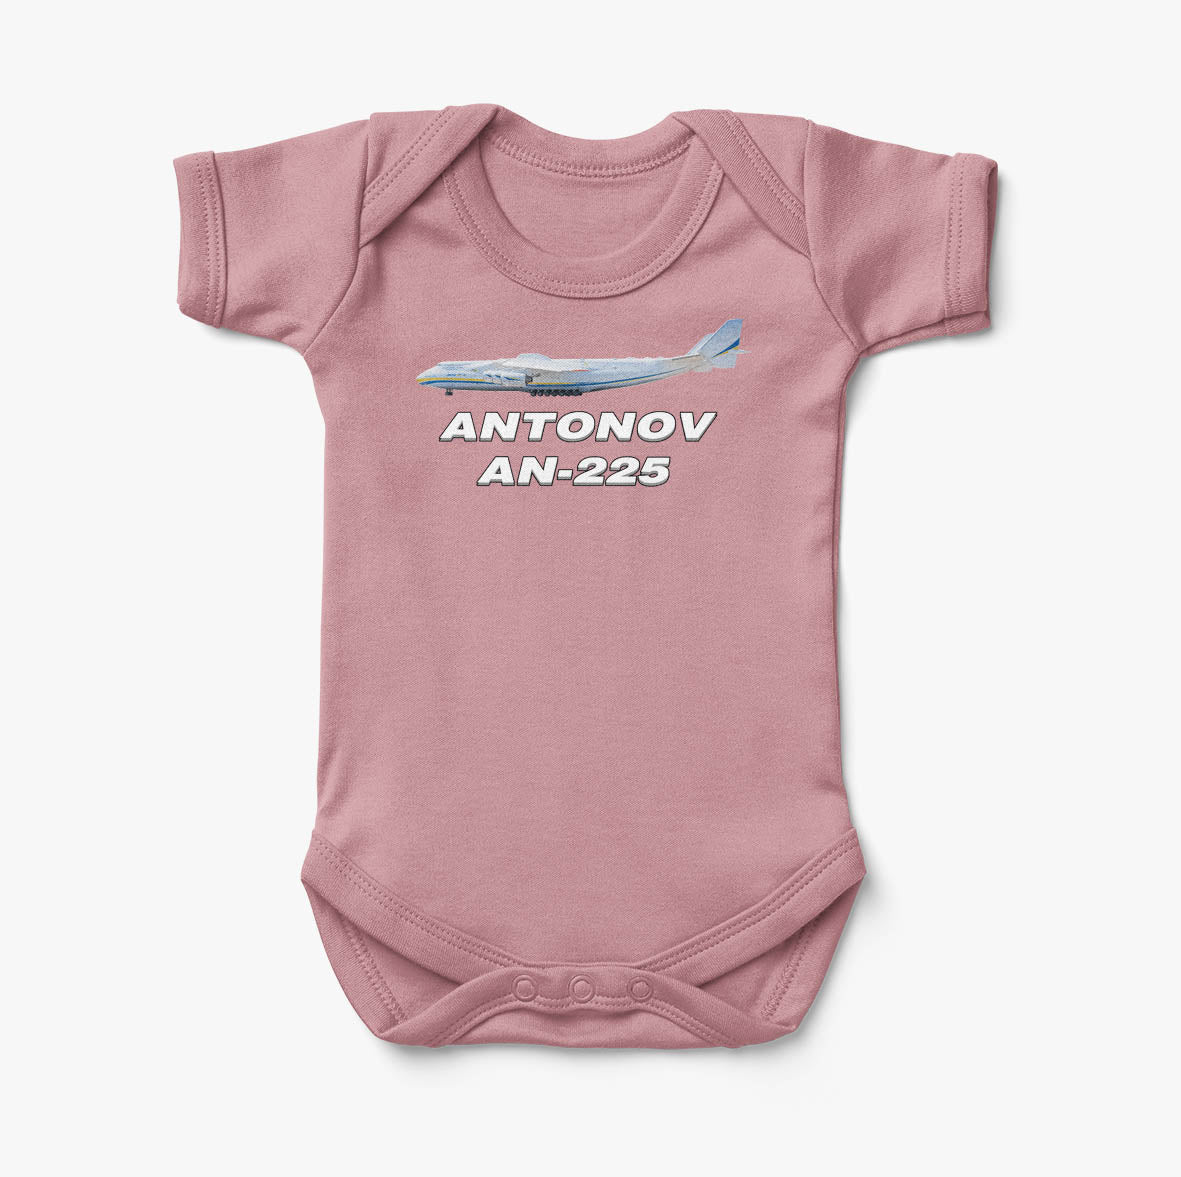 The Antonov AN-225 Designed Baby Bodysuits